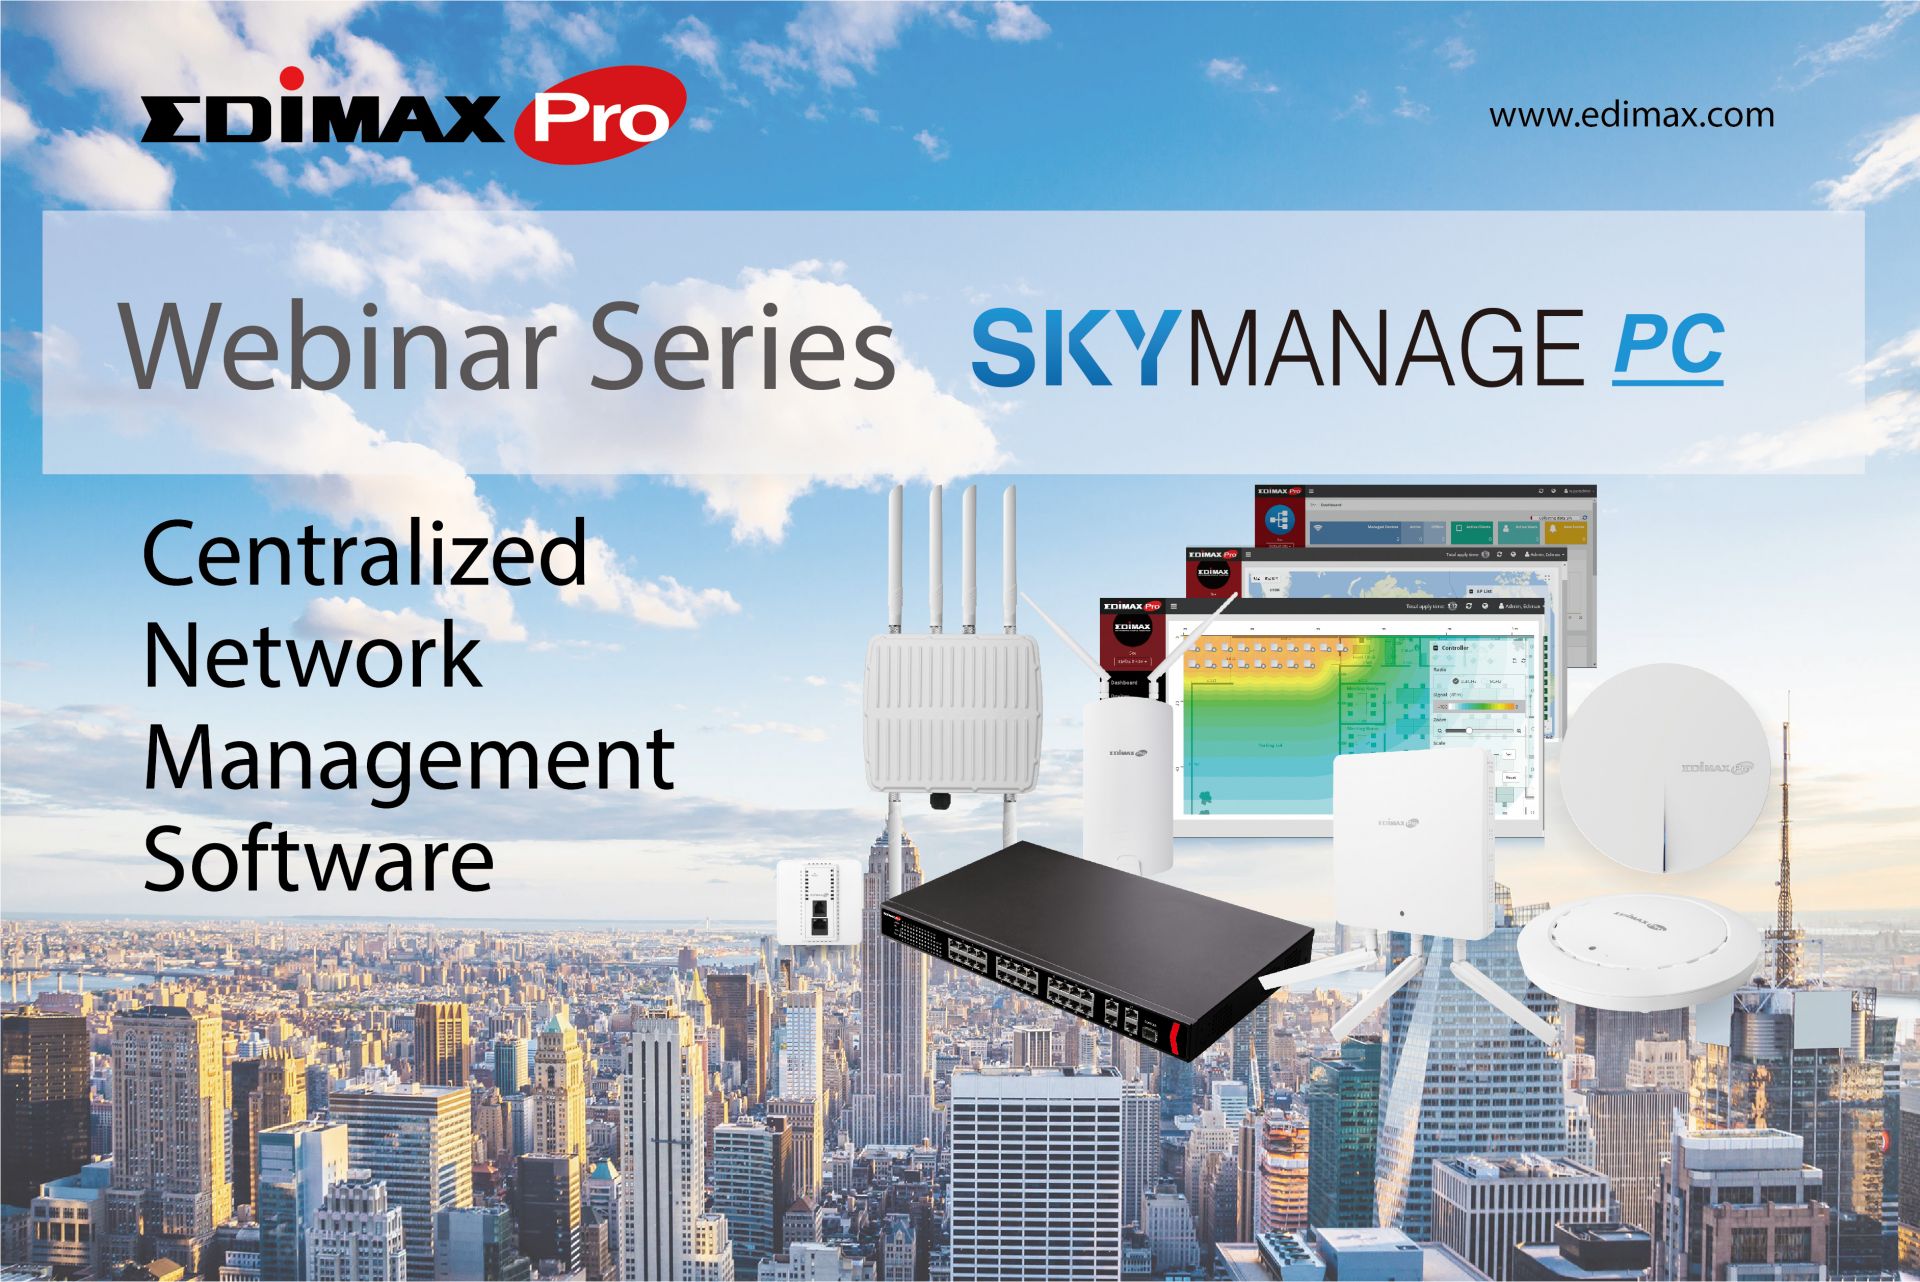 Edimax Pro SkyManage PC webinar